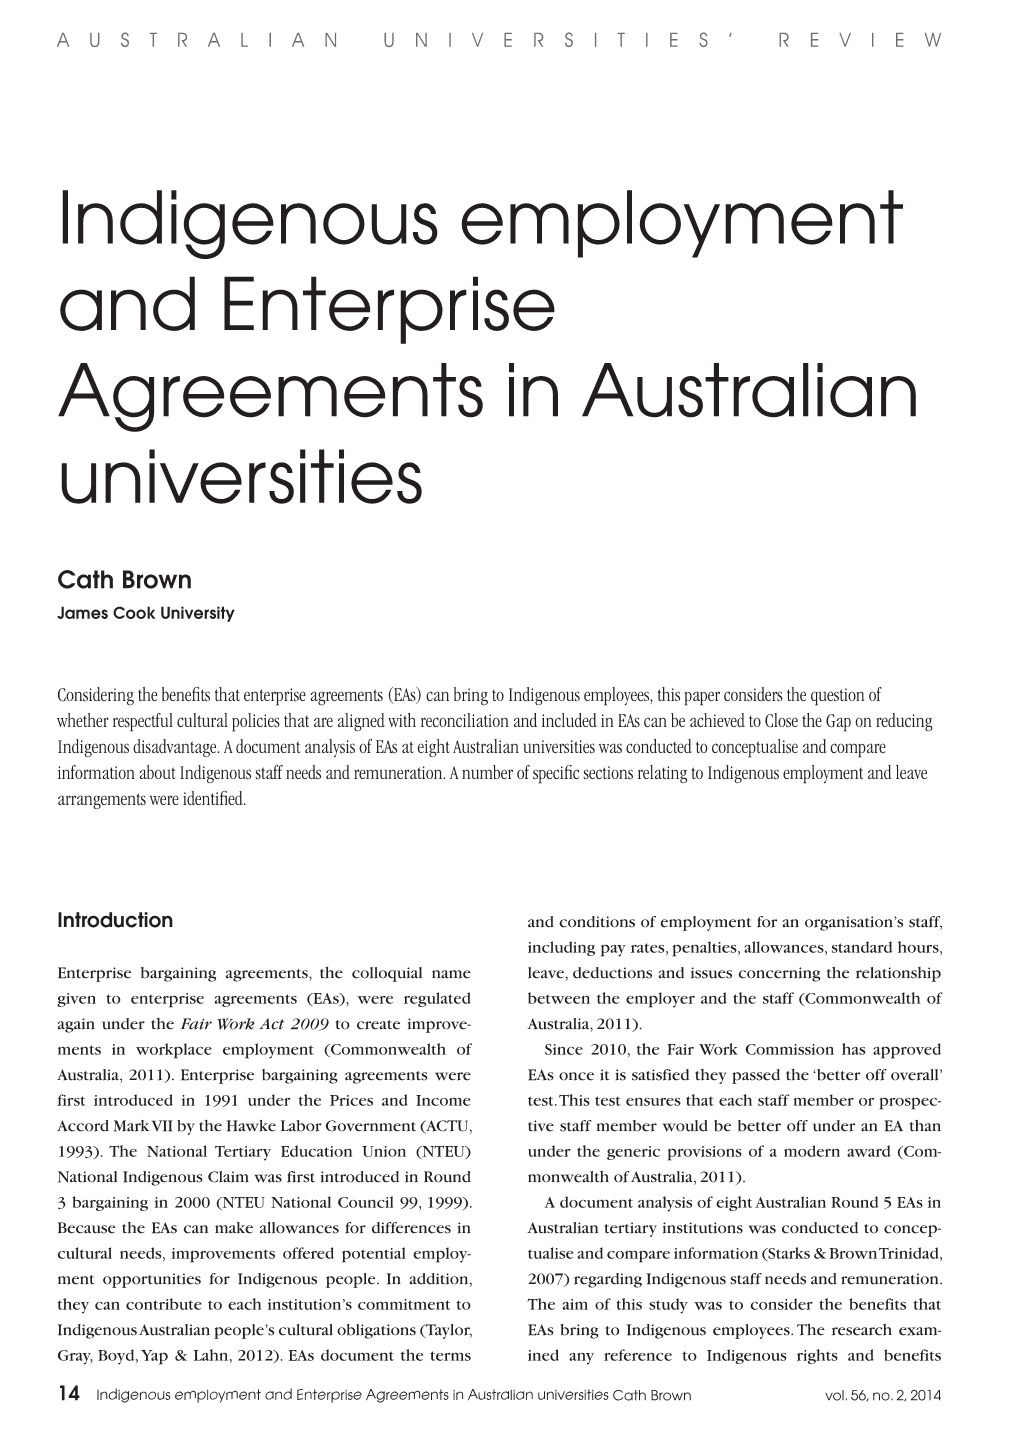 Indigenous Employment and Enterprise Agreements in Australian Universities